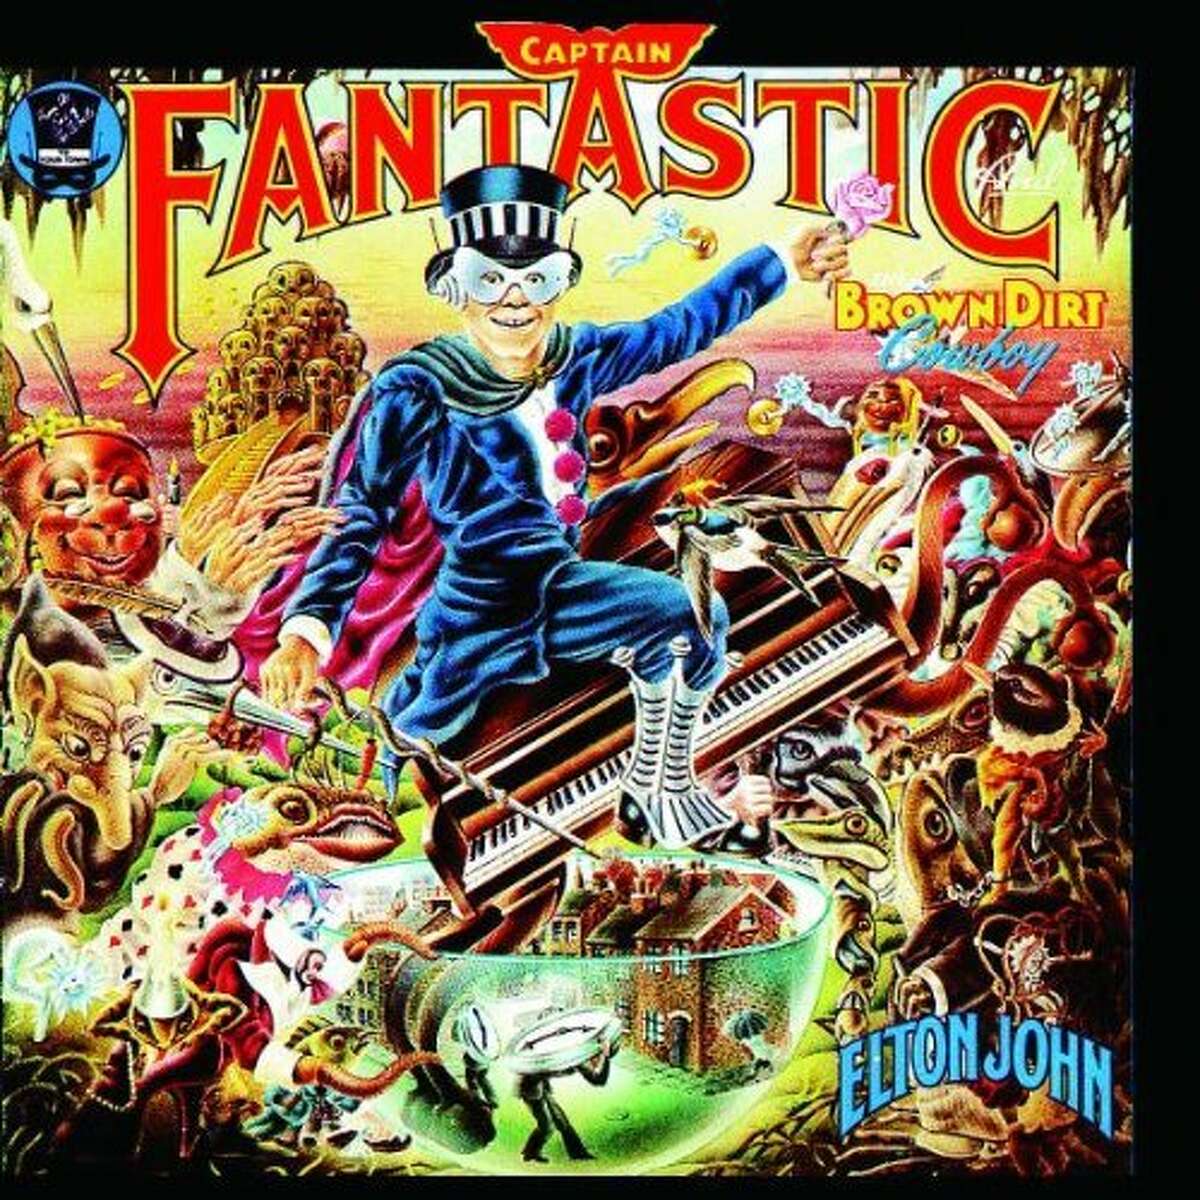 Captain Fantastic and the Brown Dirt Cowboy, Elton John, 1975